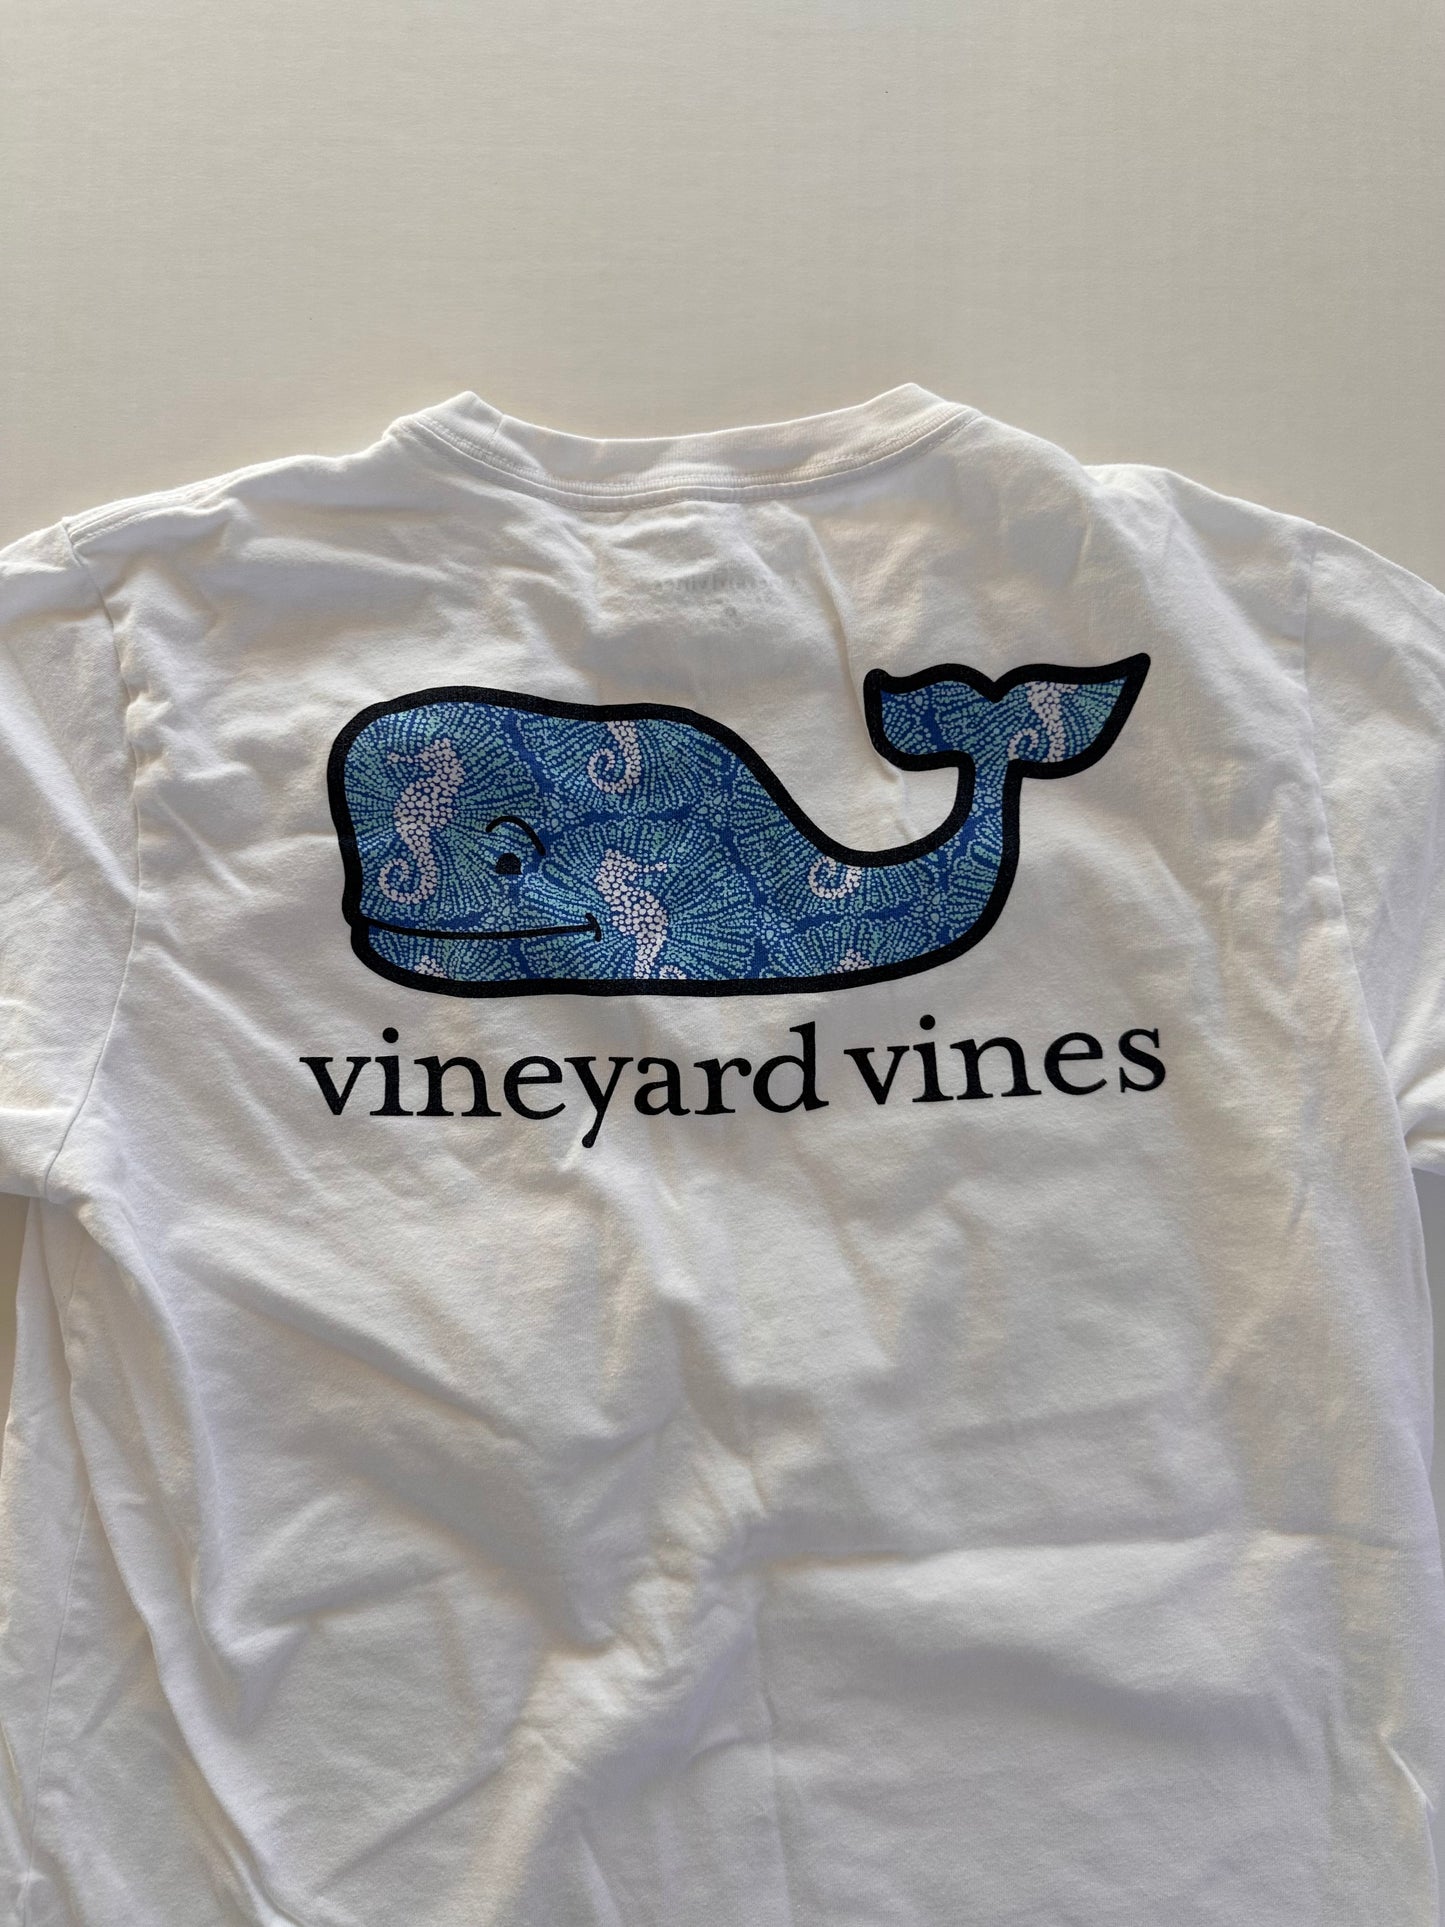 Vineyard Vines Boys Medium 10-12 T shirt cotton